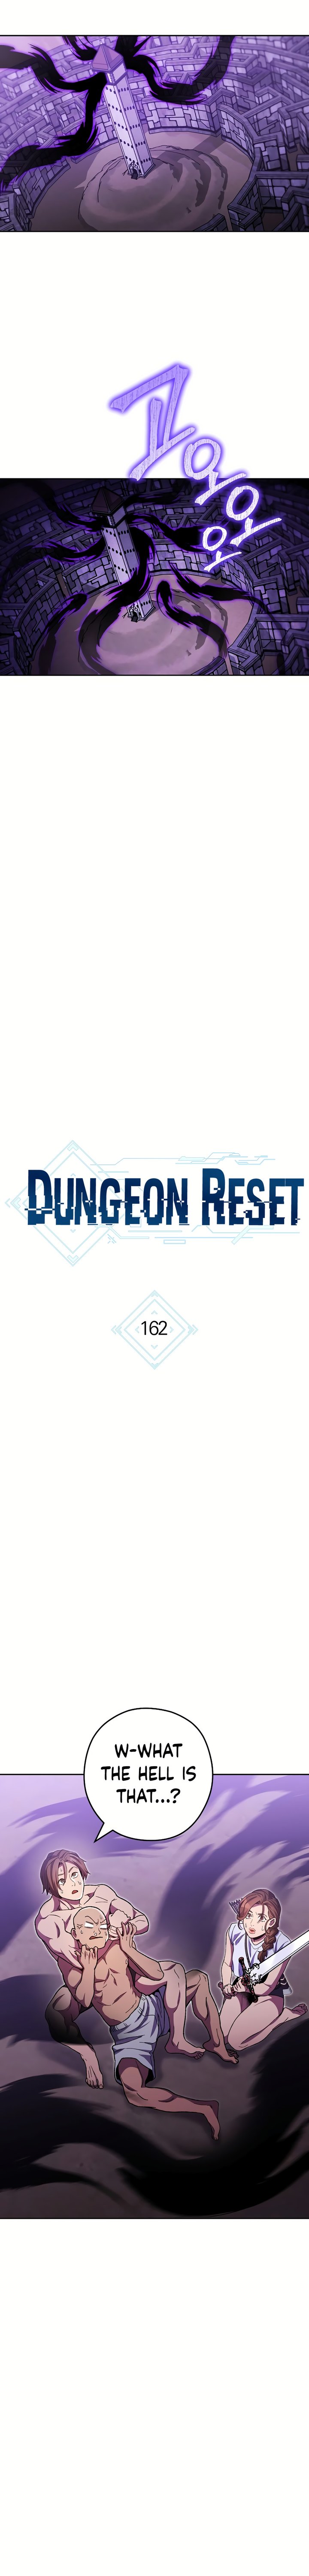 Dungeon Reset 162 2